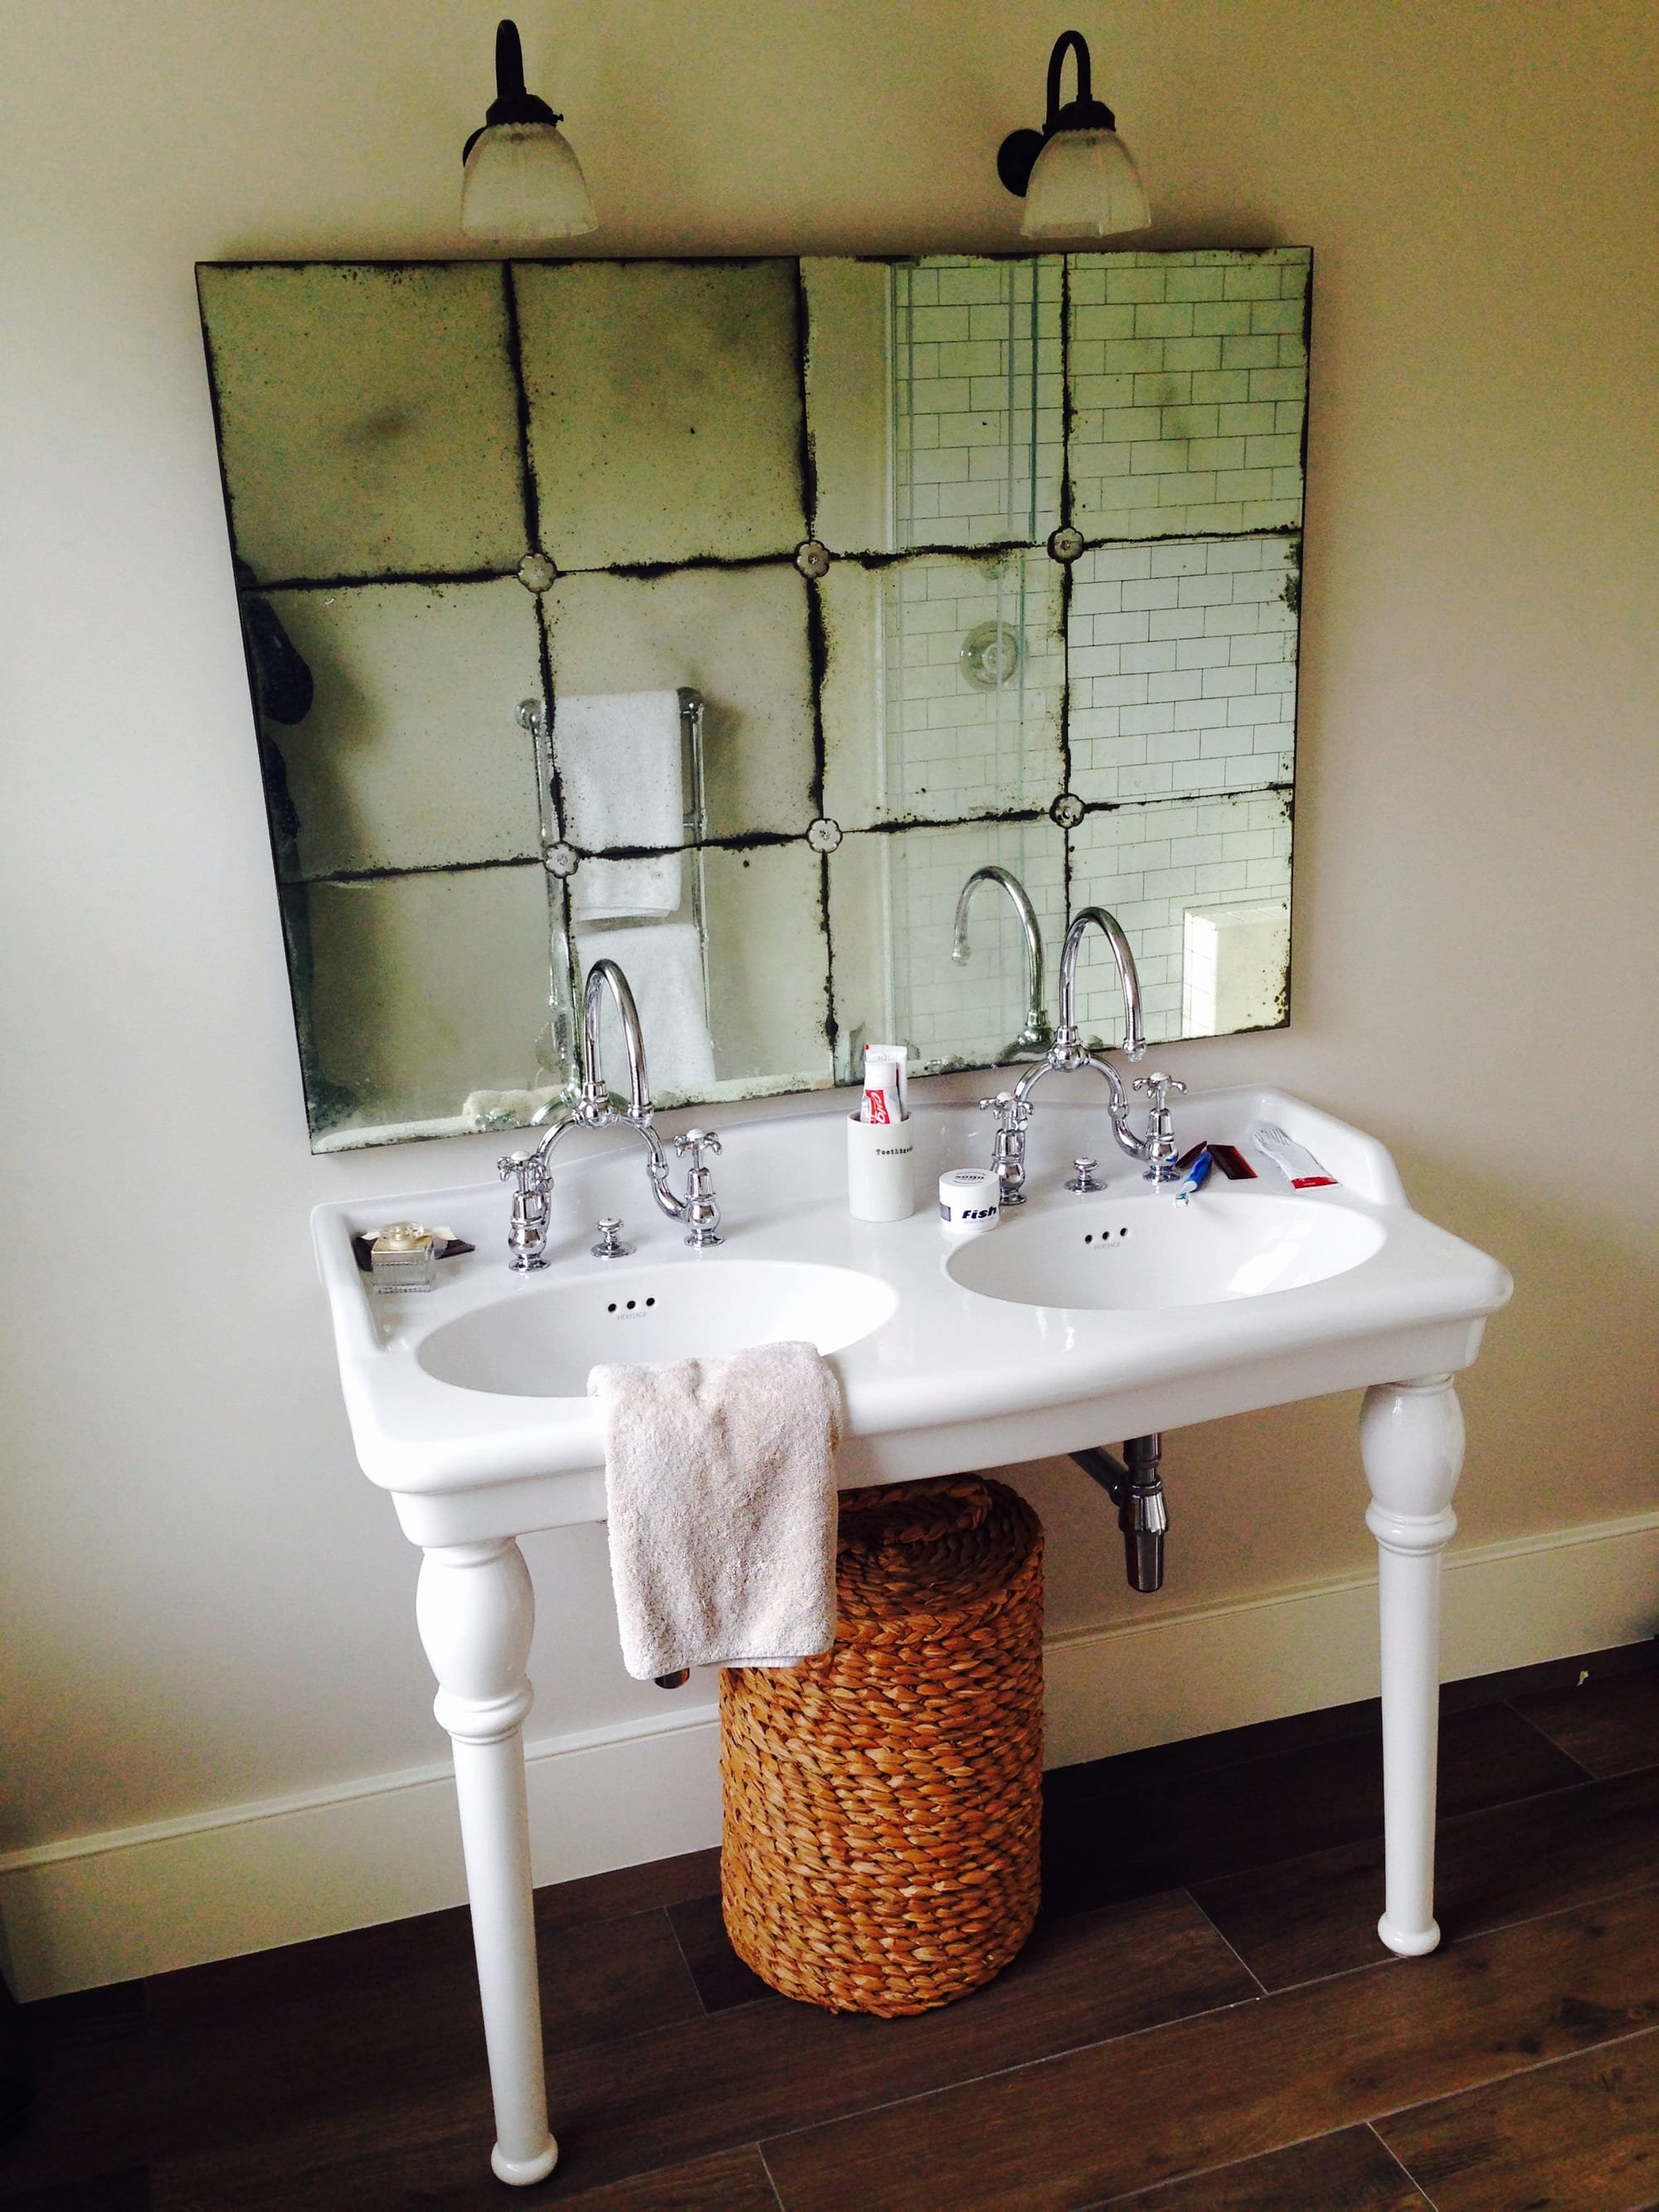 Double sinks and antique mirror to new en-suite bathroom in Wandsworth house refurbishment.